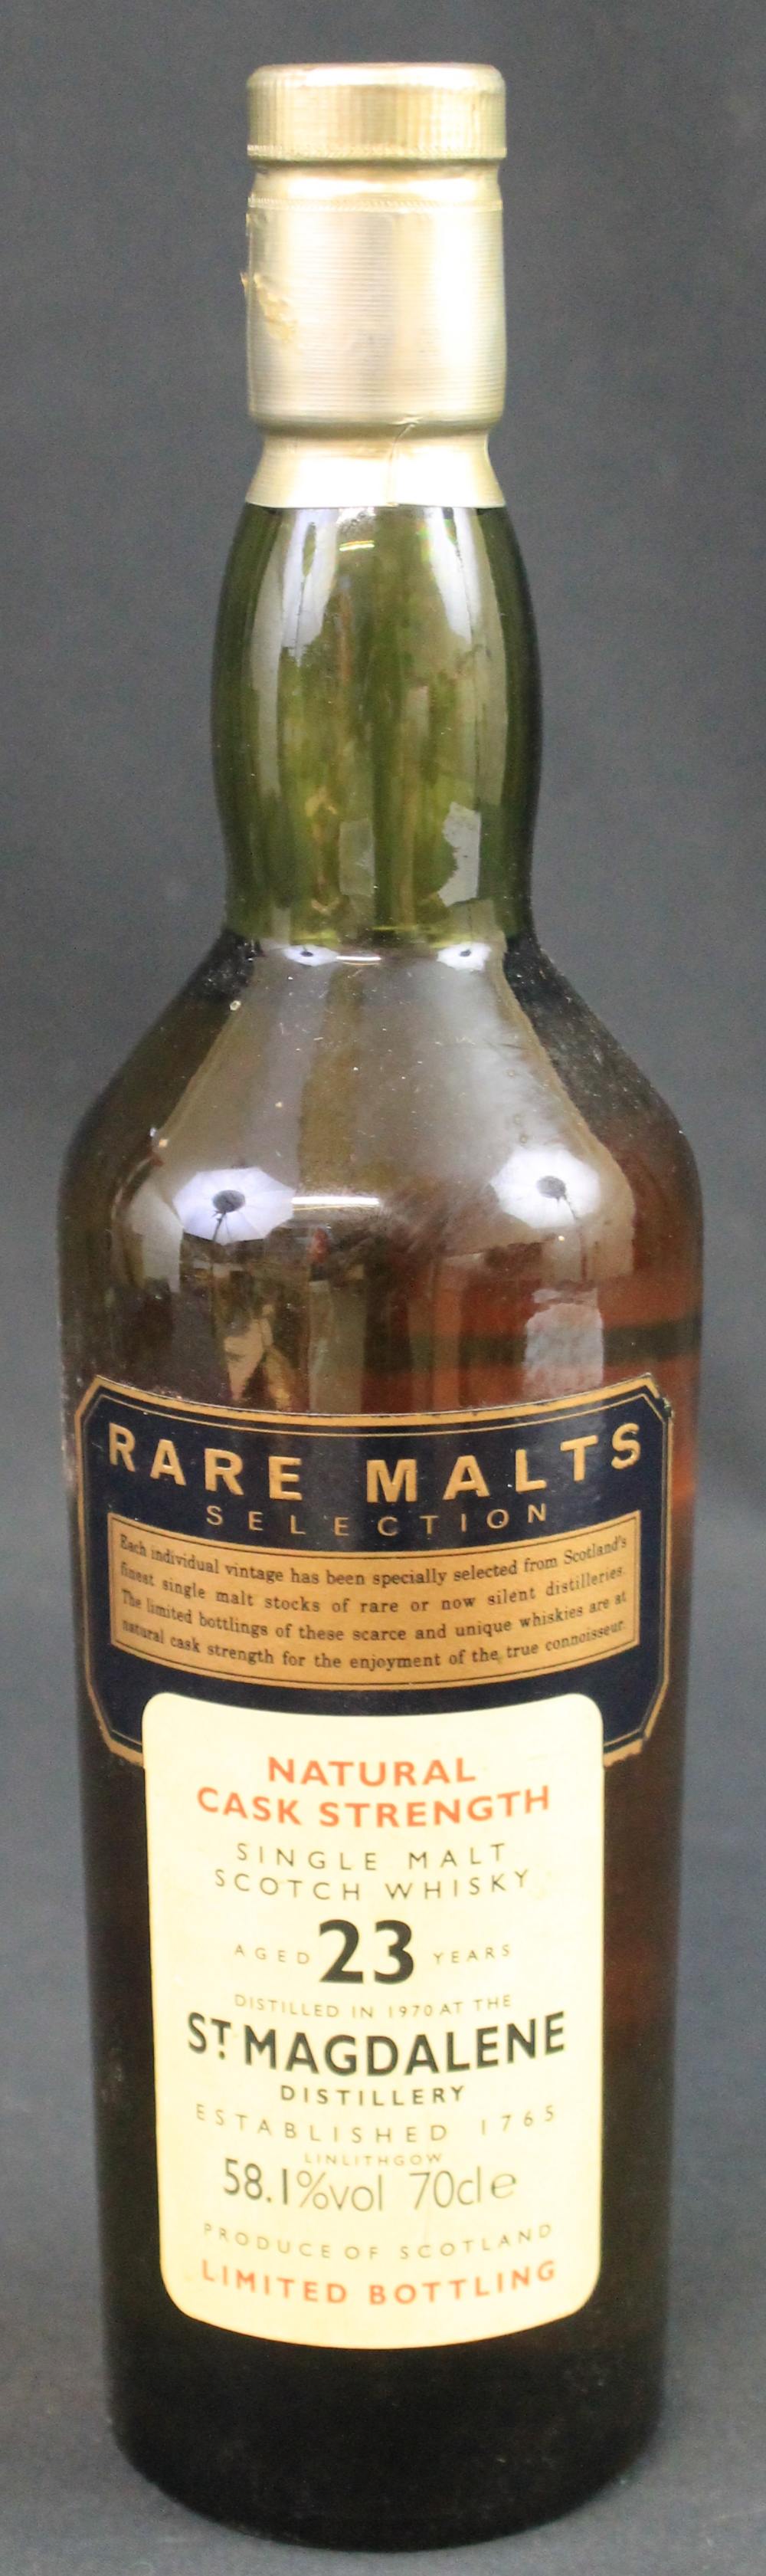 Rare Malt Selection St. Magdalene Single Malt Scotch Whisky, aged 23 years, distilled in 1970, 58.